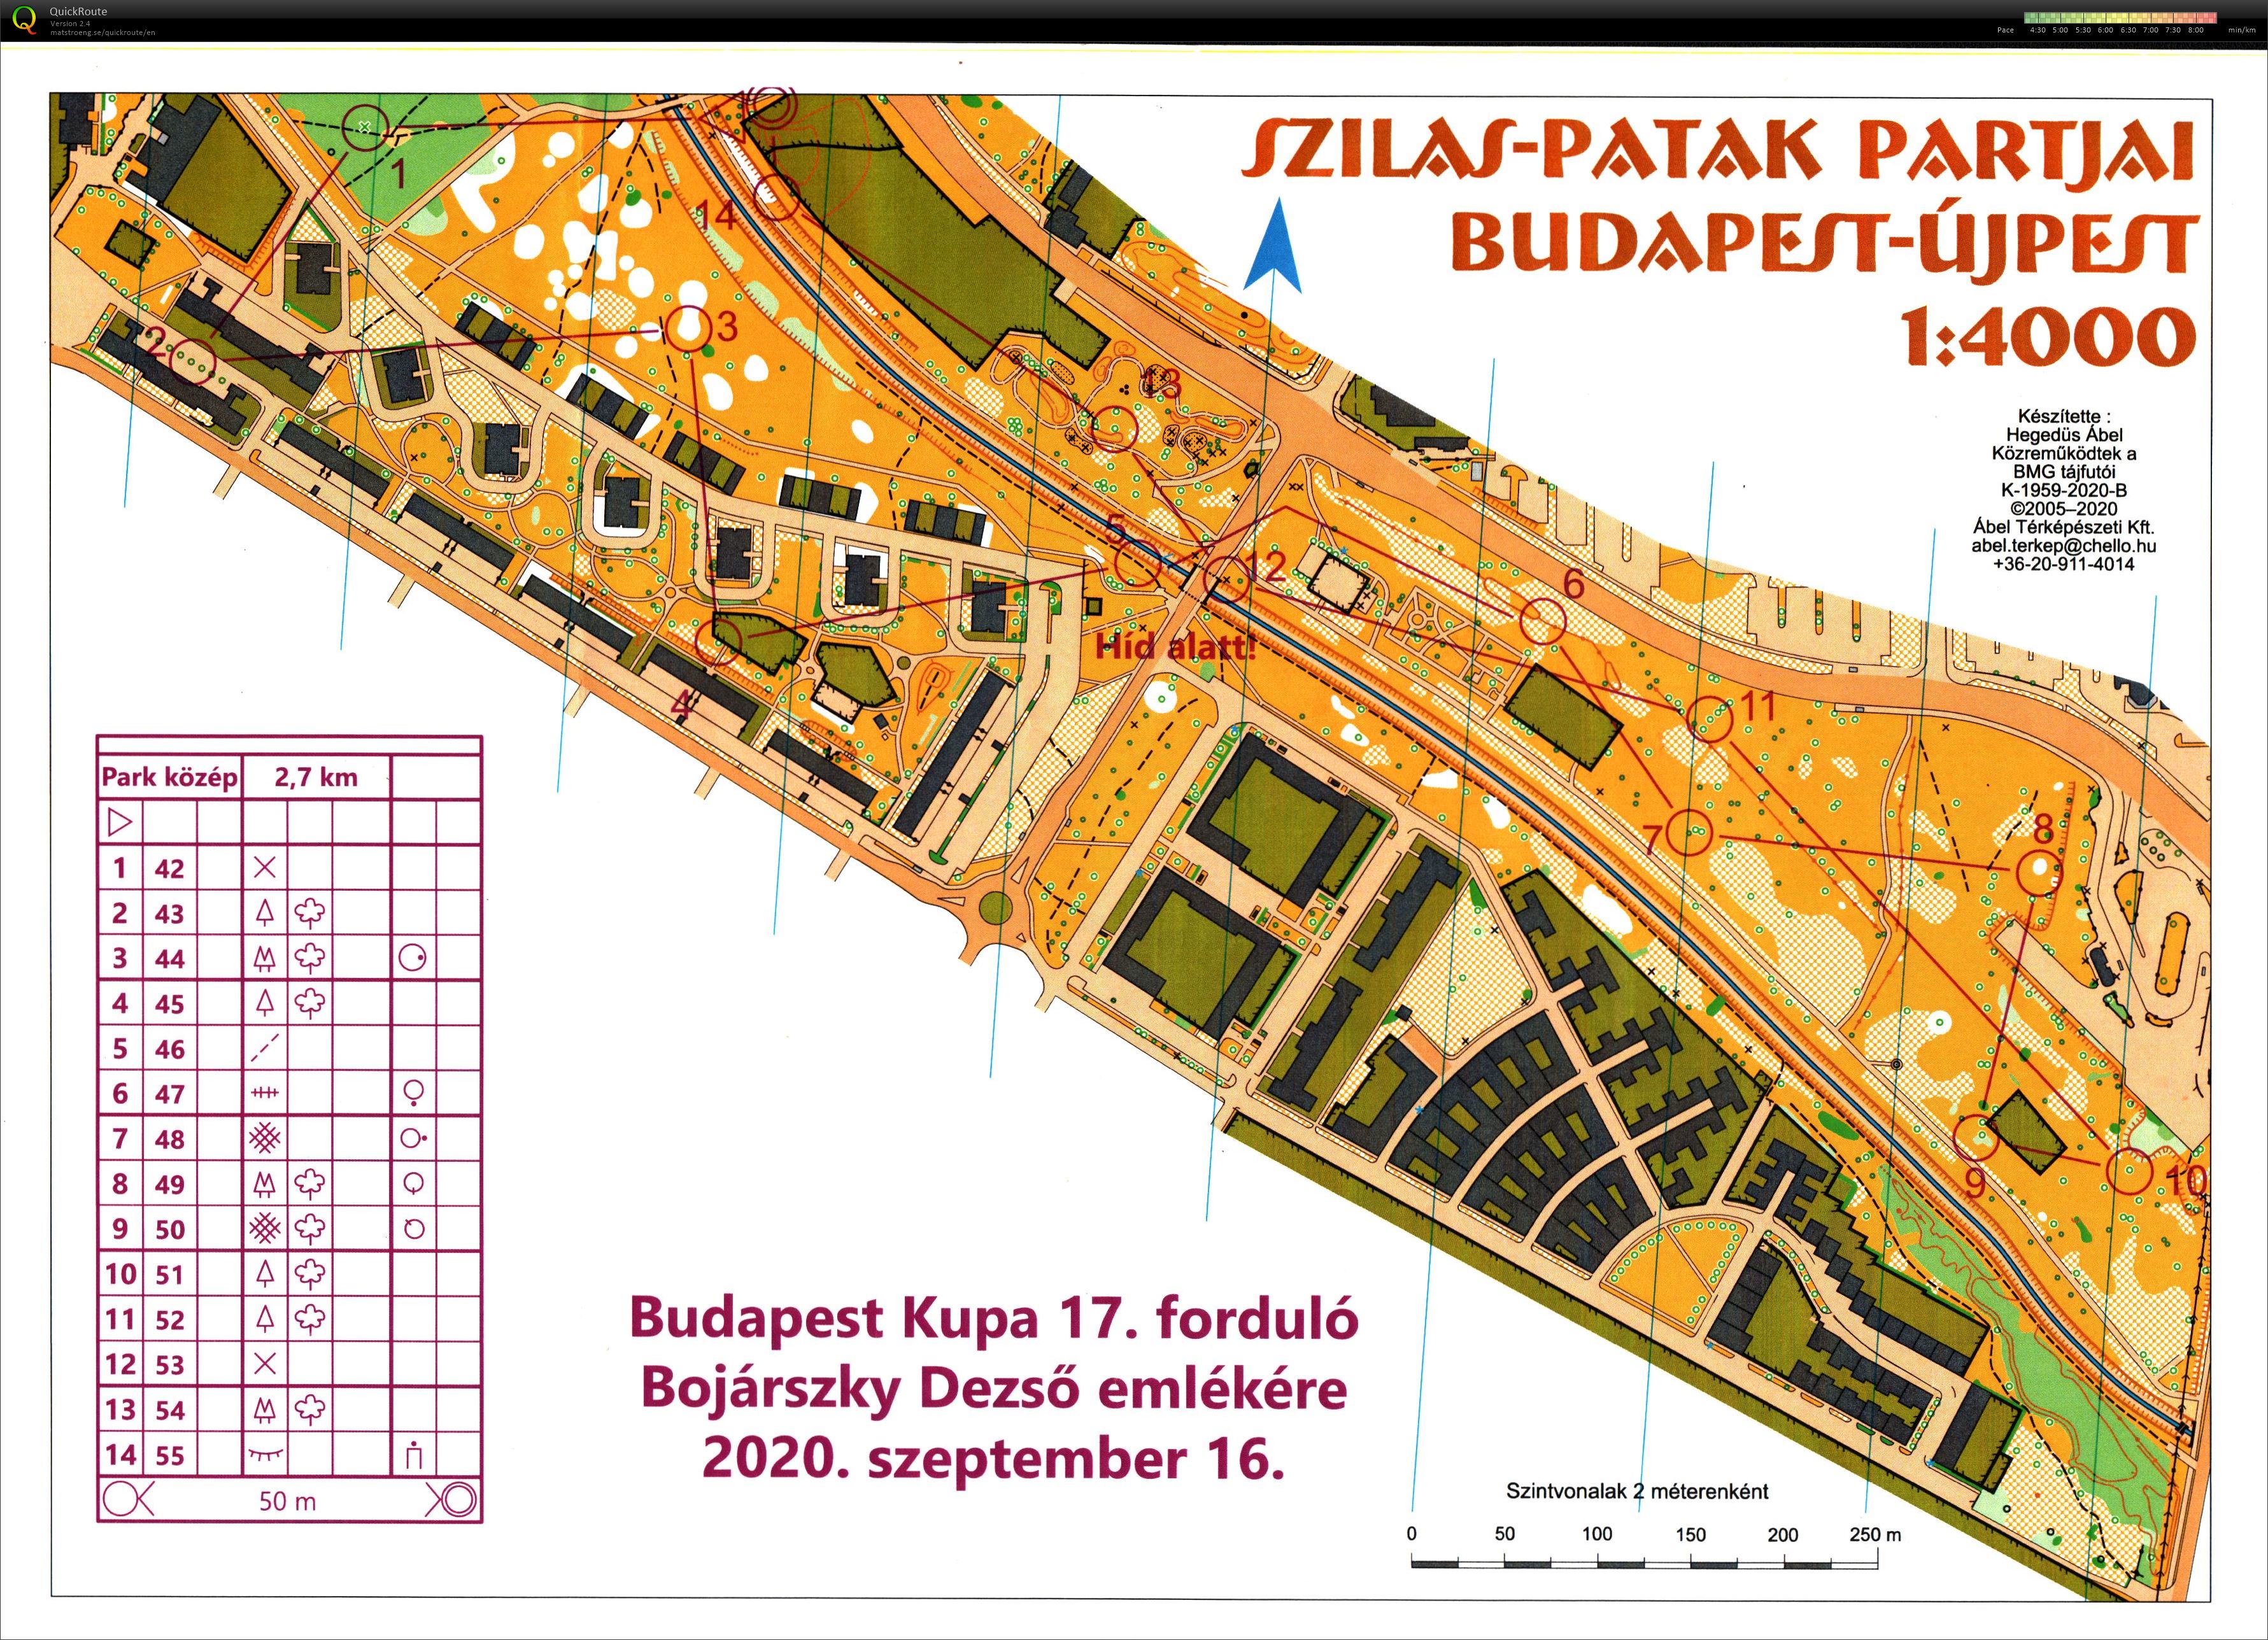 Budapest Kupa 17. forduló (16/09/2020)